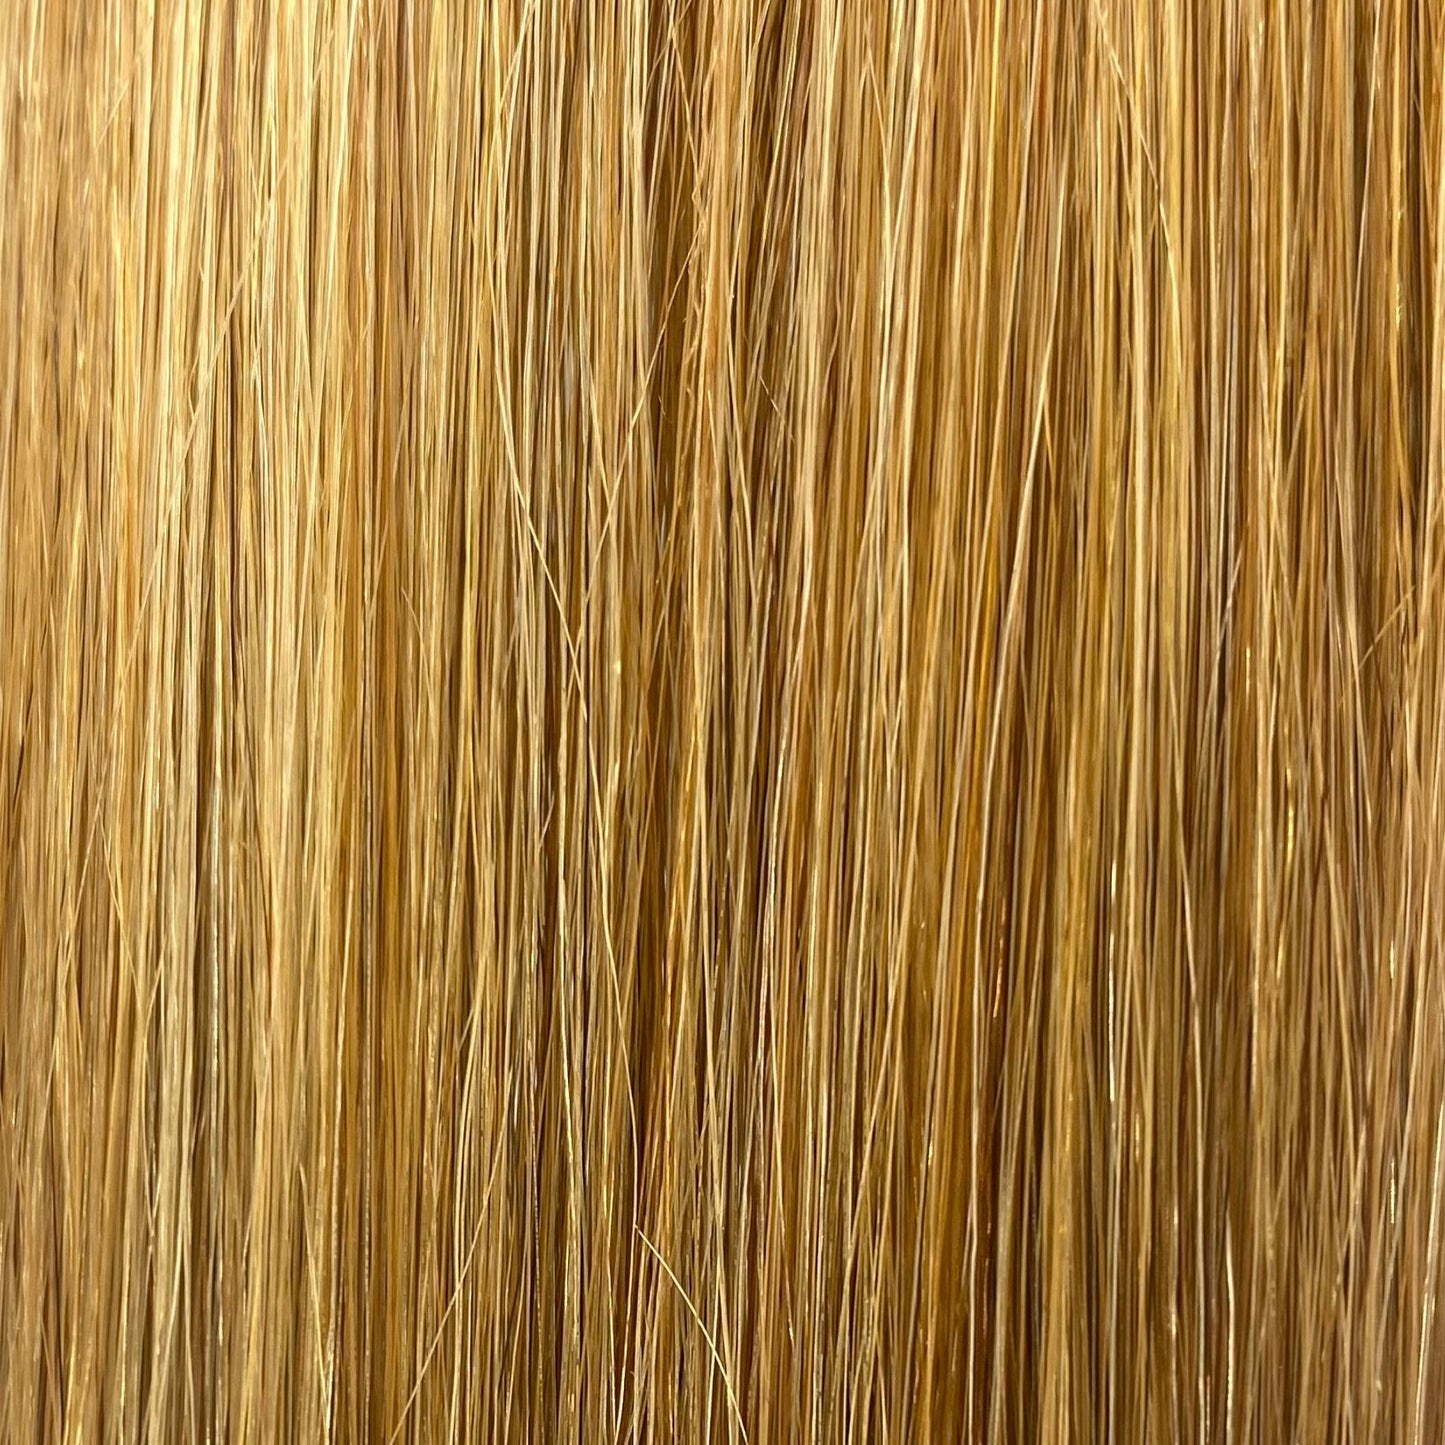 Fusion hair extensions #27/140 - 50cm/20 inches - Golden Blonde/Golden Ultra Blonde Highlight Fusion Euro So Cap 